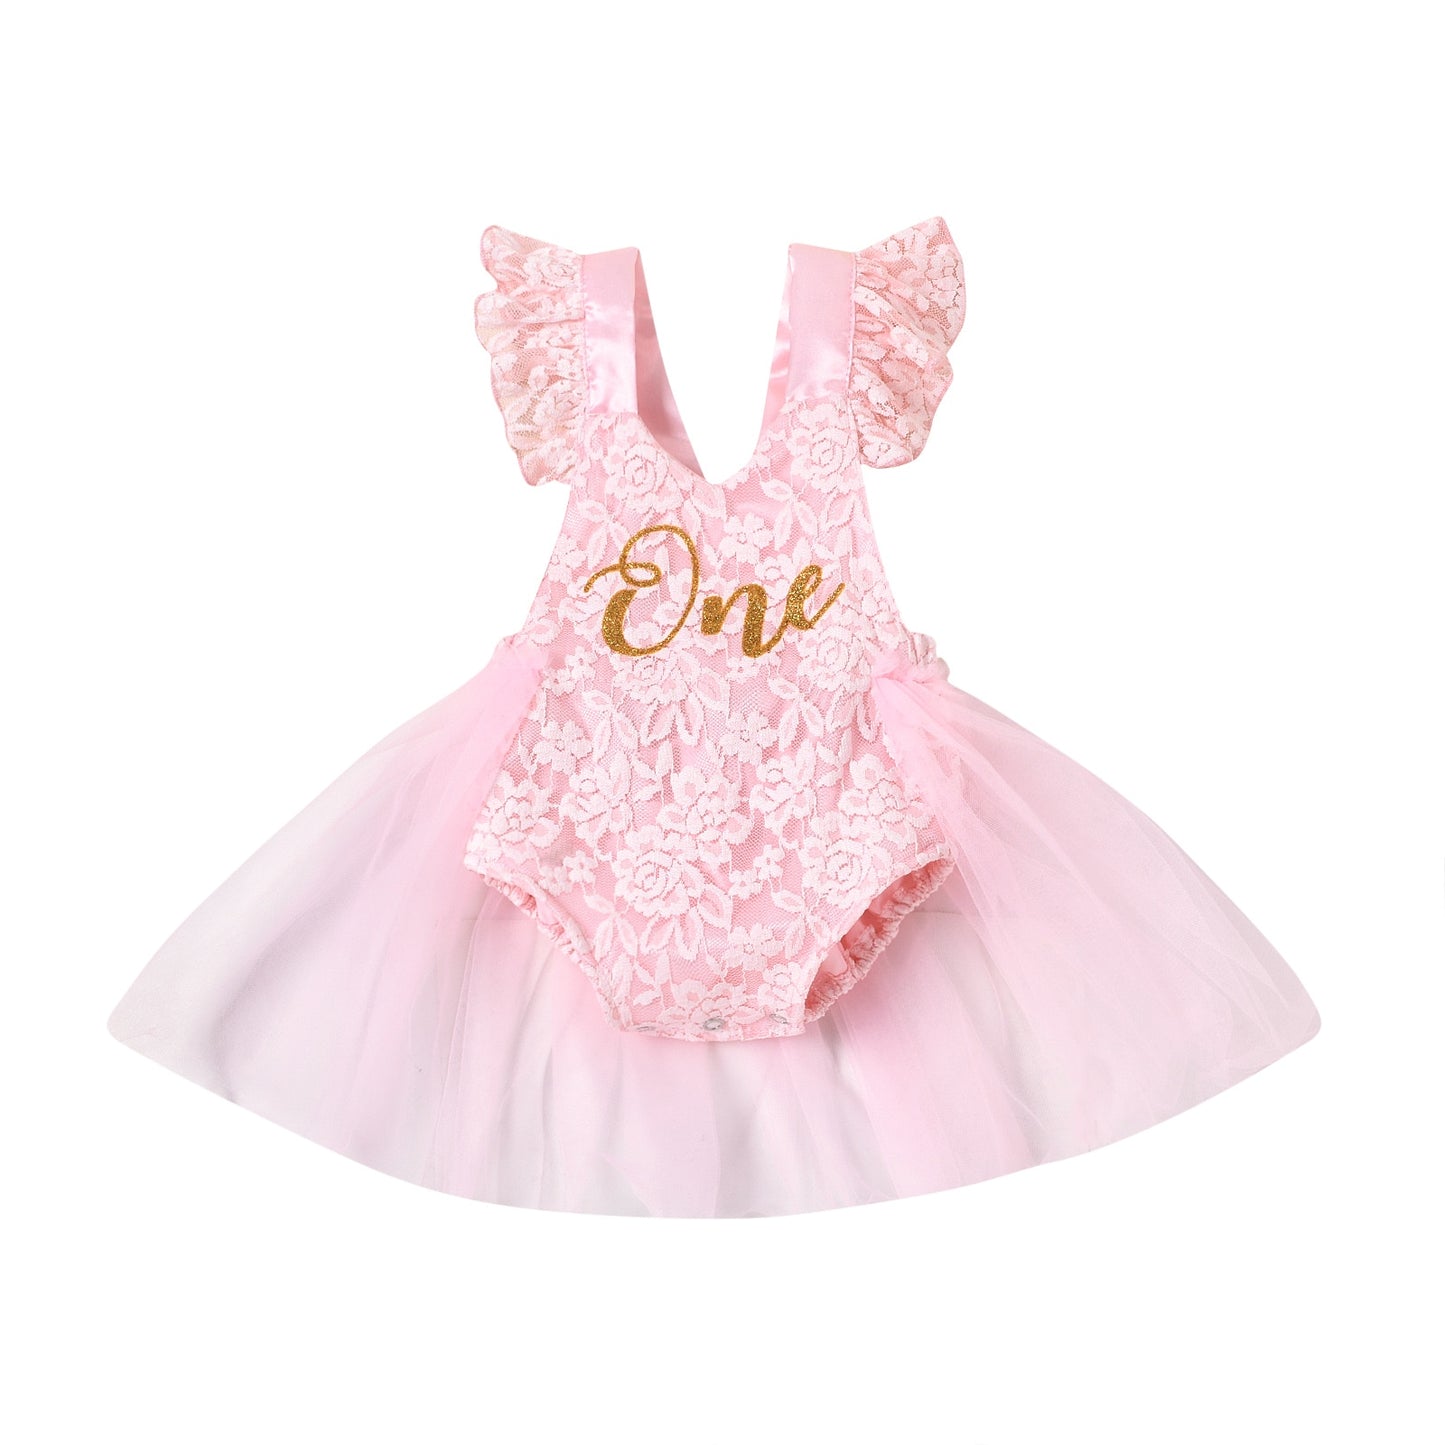 LUX BABY 1st Birthday Dress